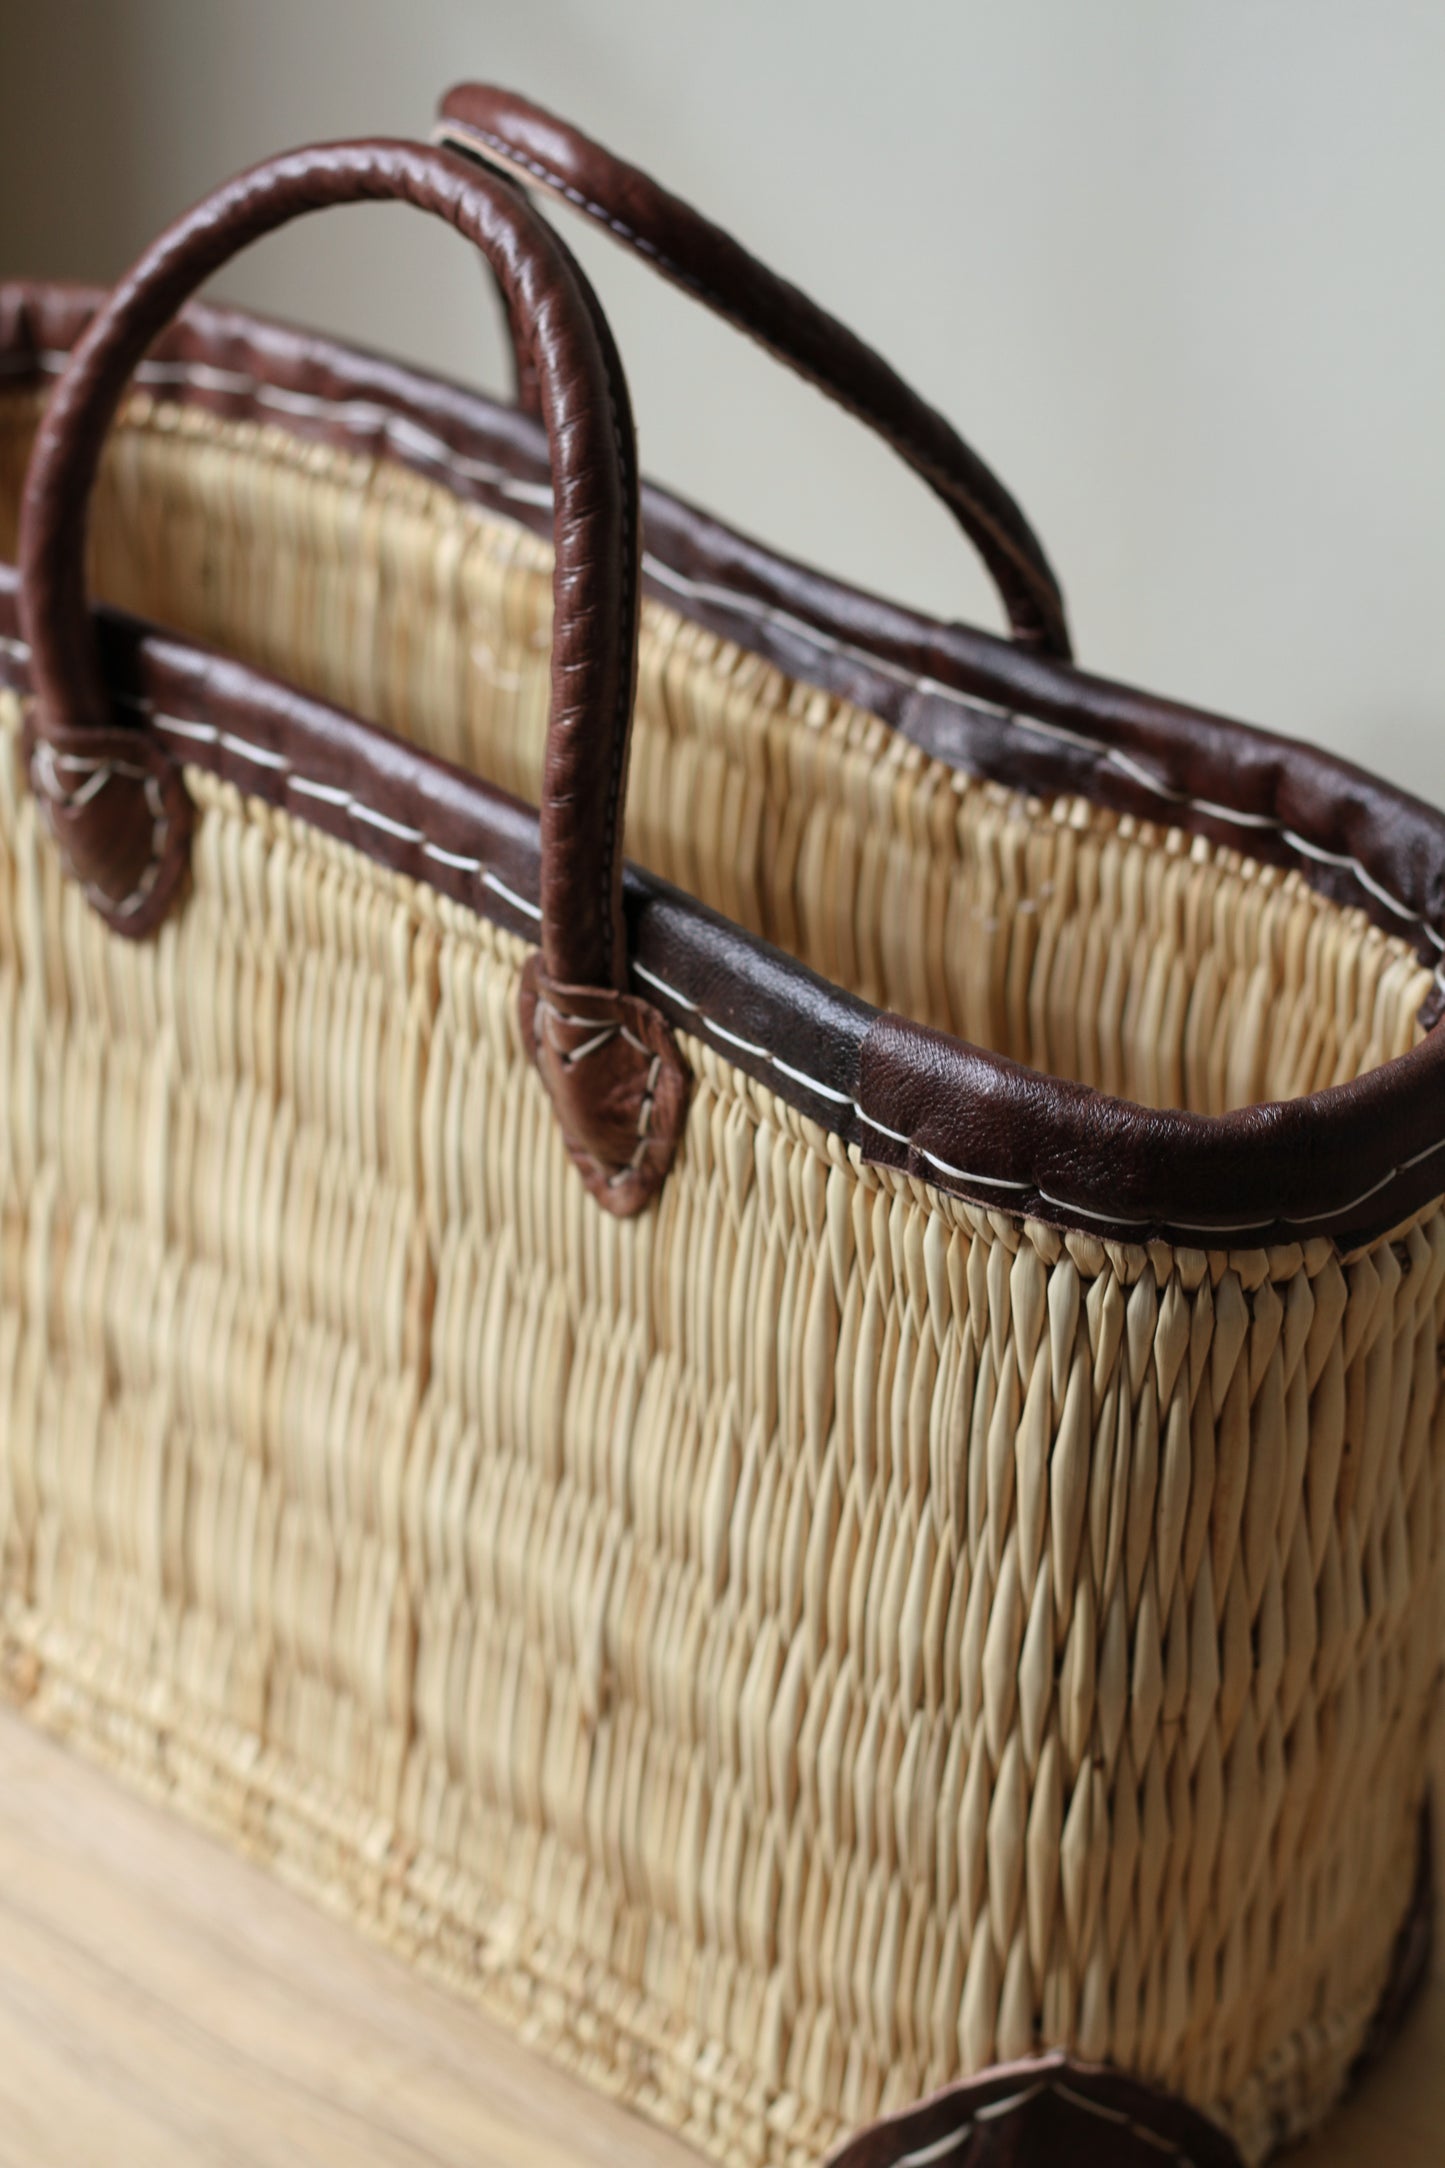 Handwoven Shopping Basket